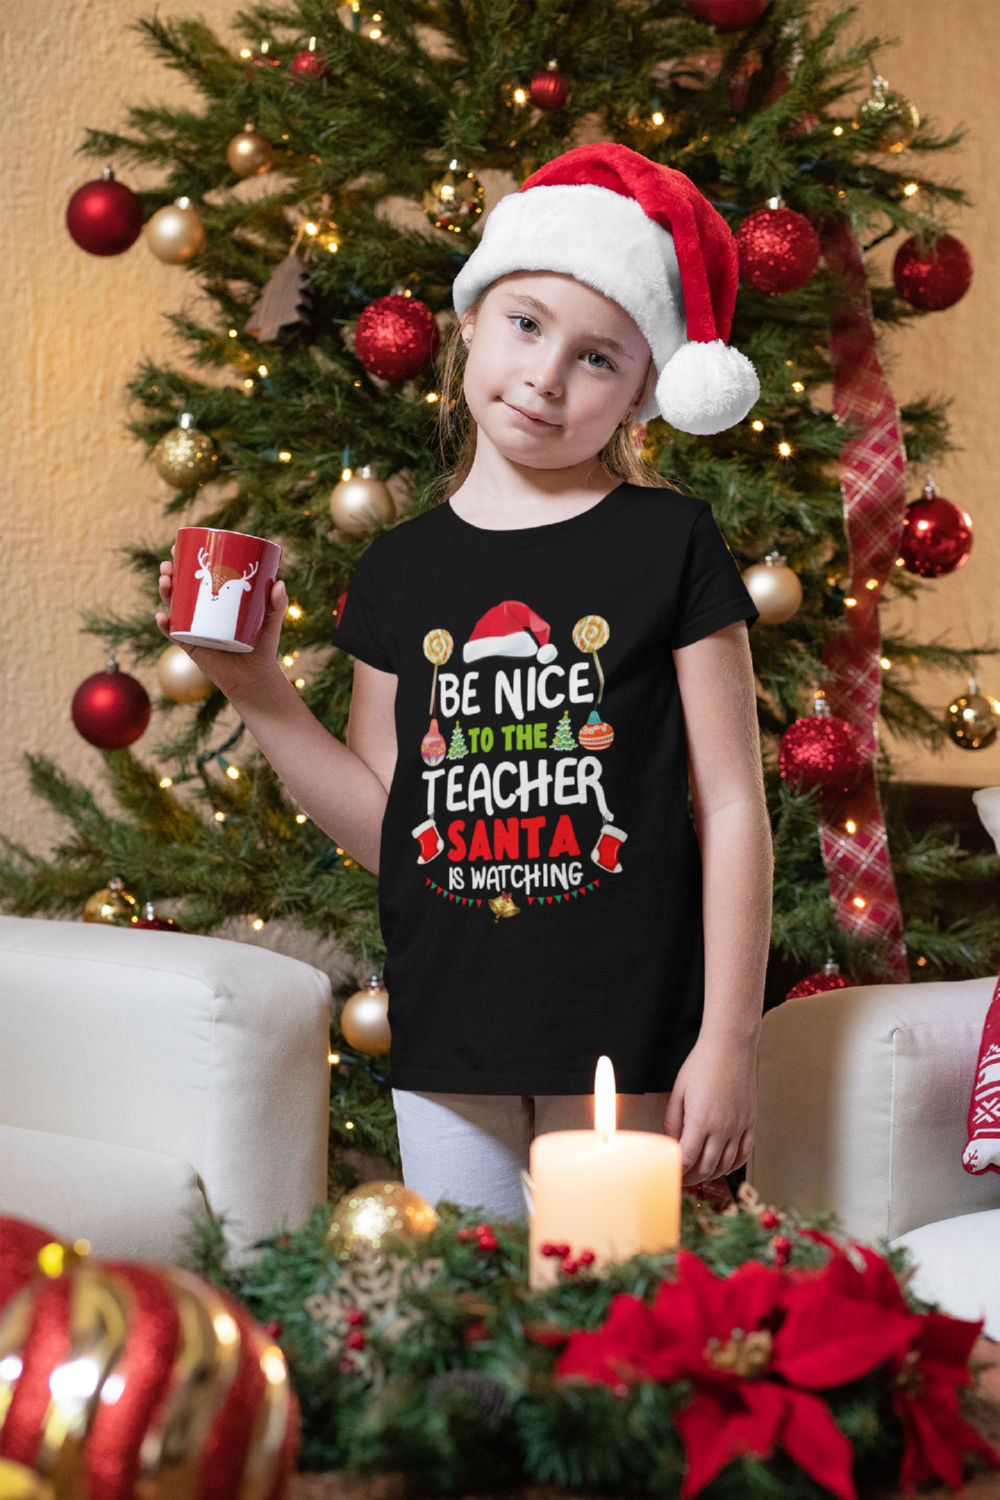 T-Shirt Design for Christmas